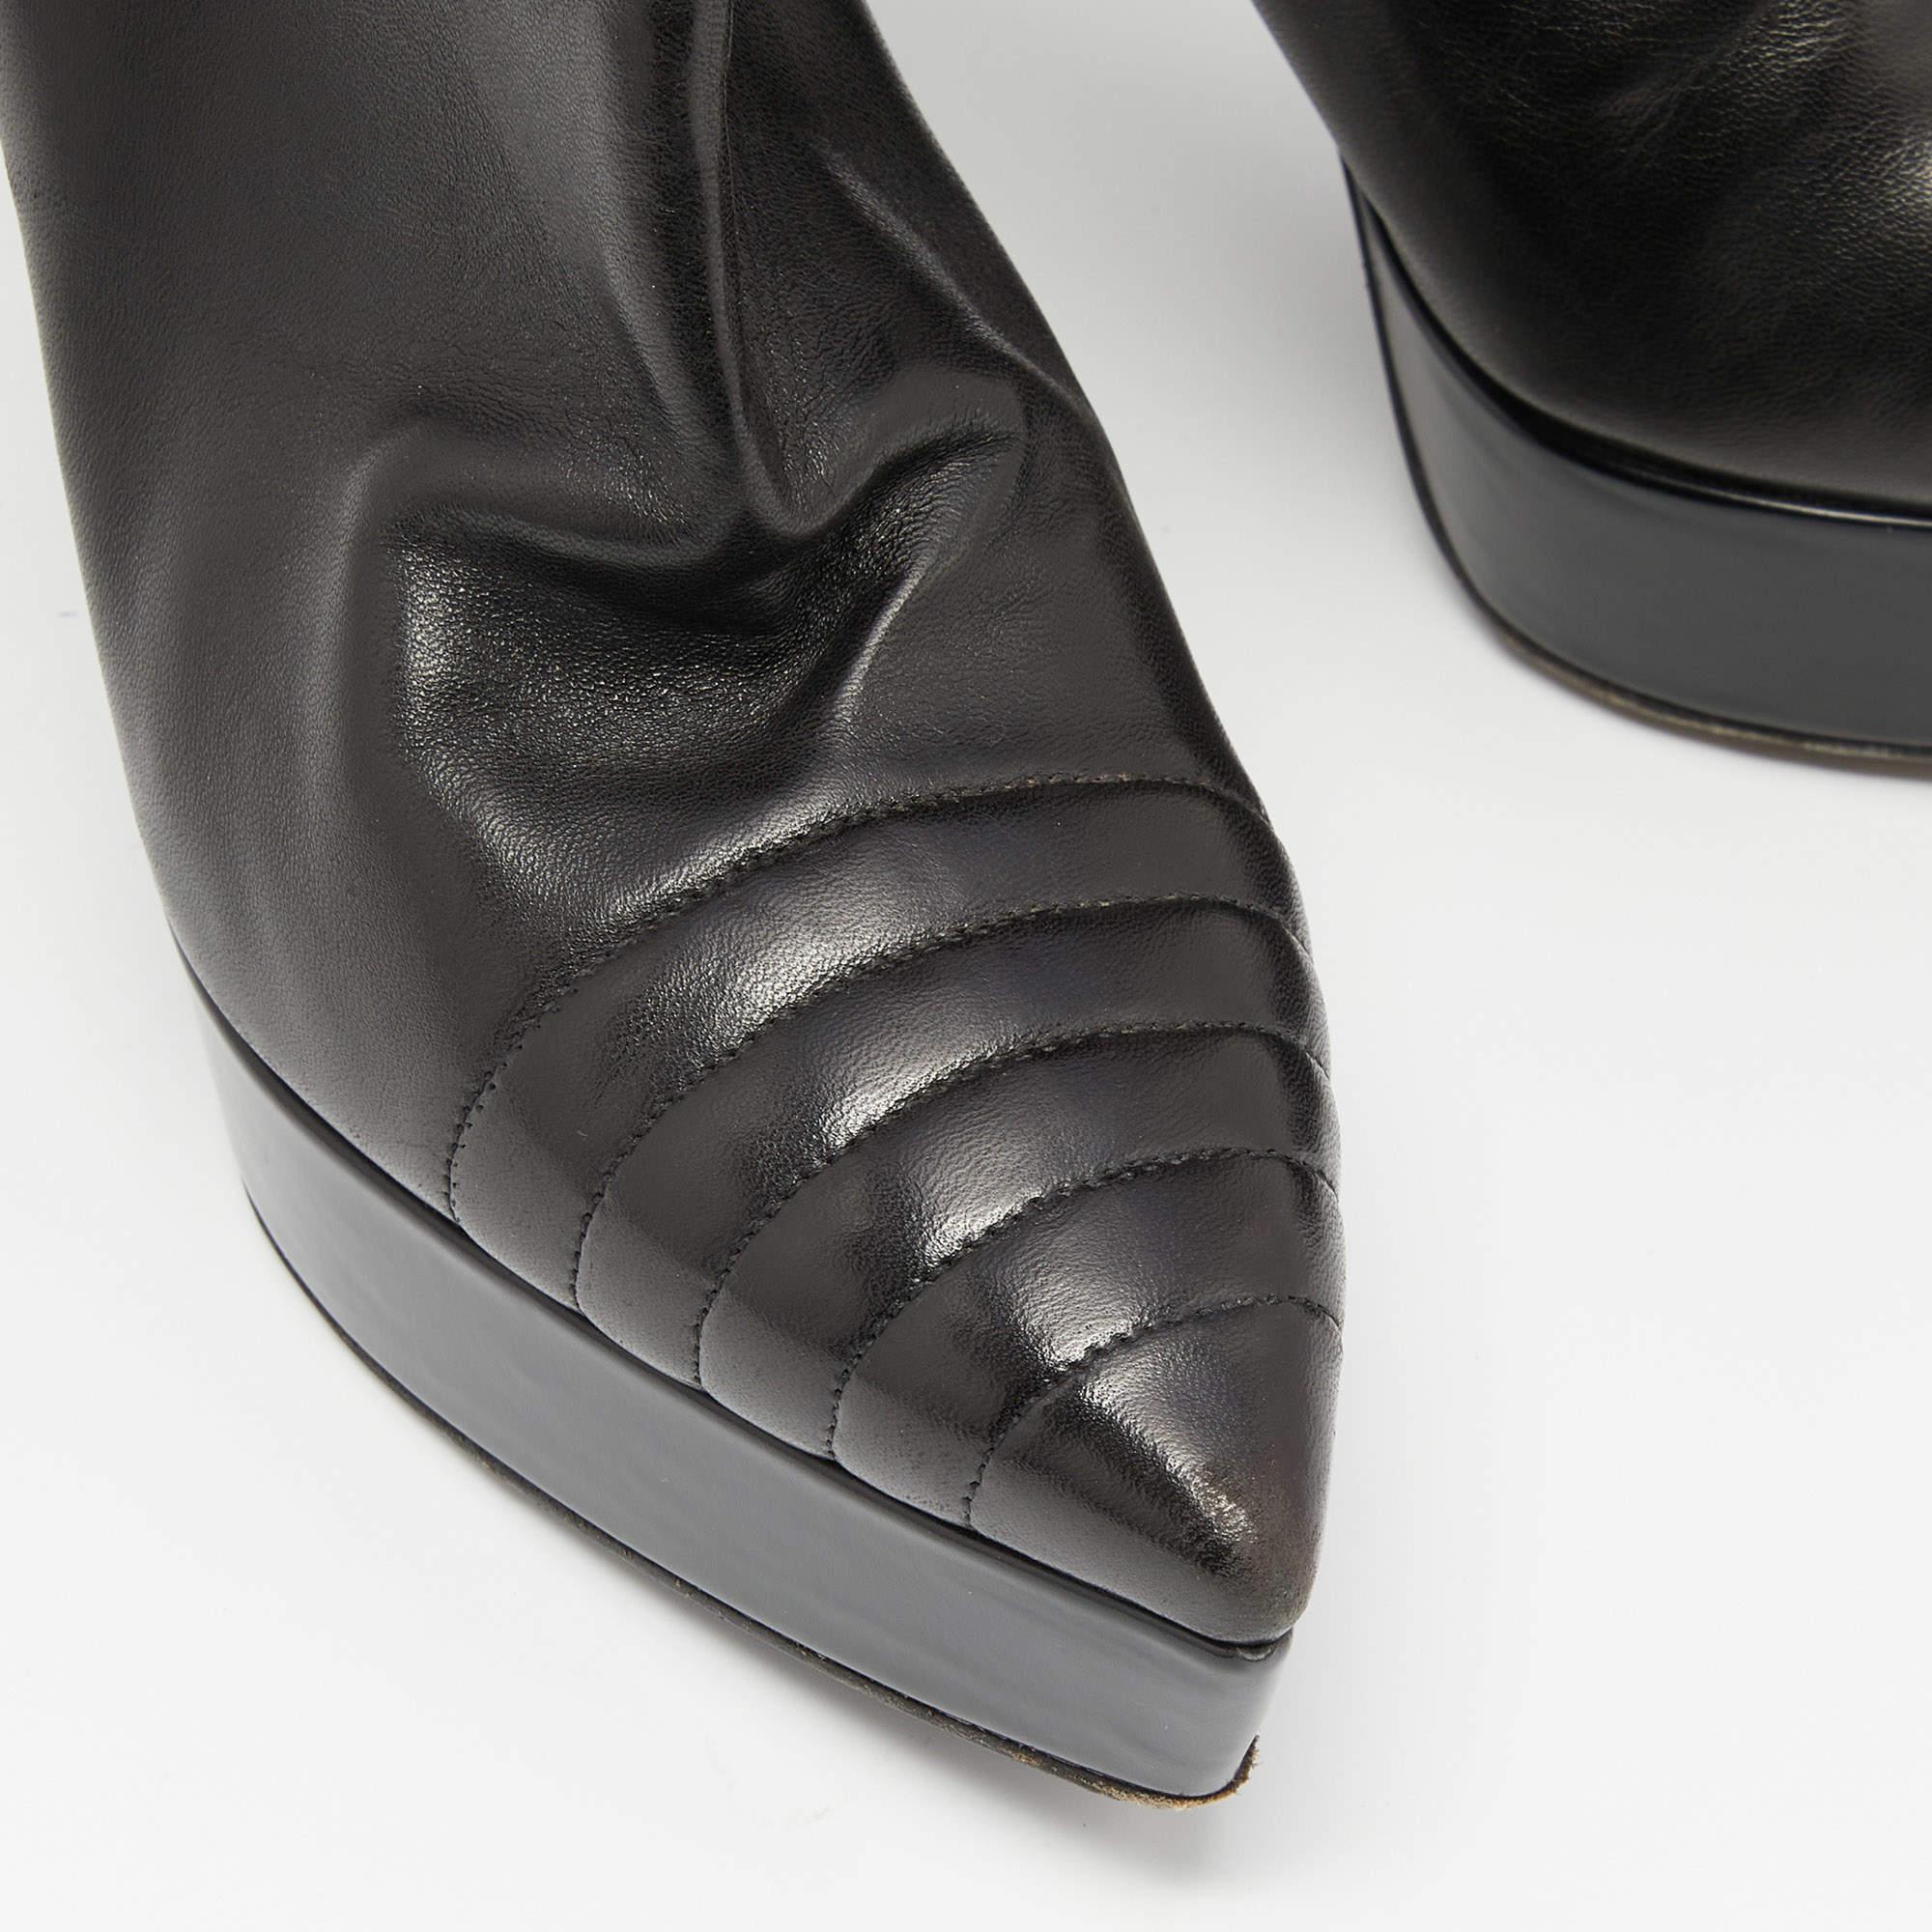 Prada Black Leather Platform Ankle Booties Size 38 2